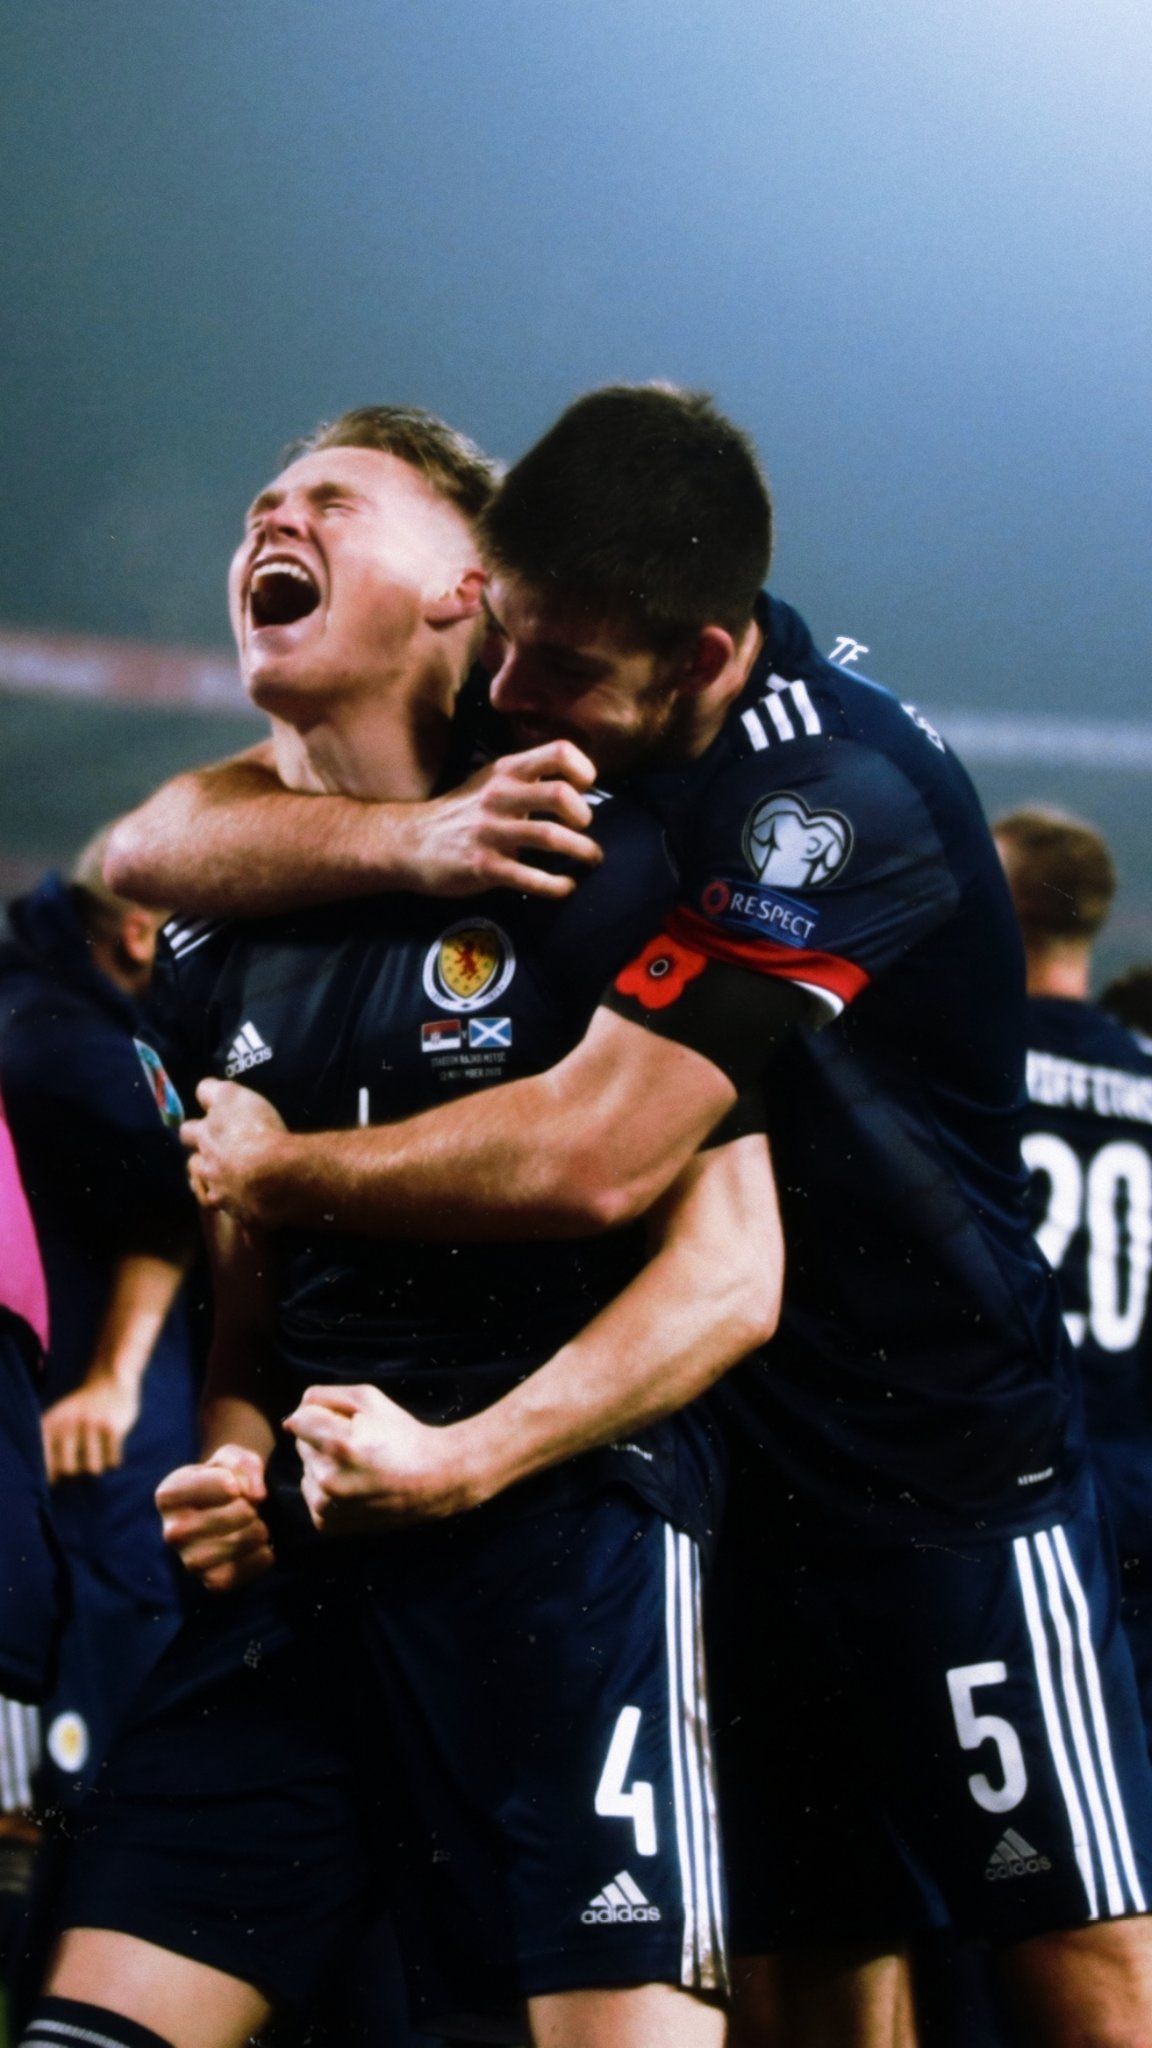 Scotland National Football Team Wallpapers